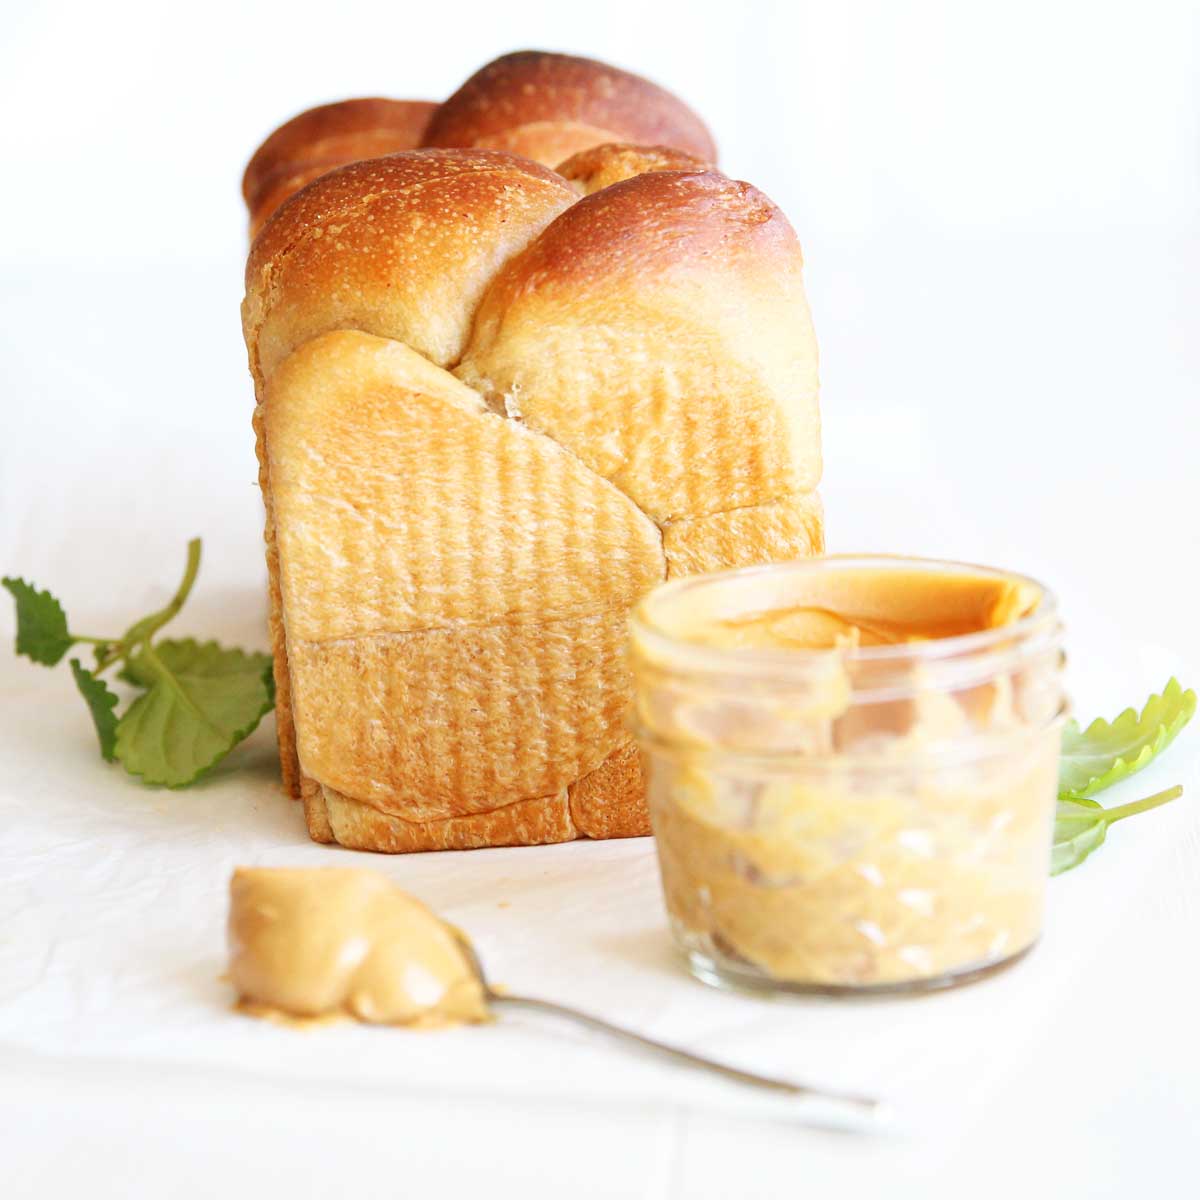 Peanut Butter Yeast Bread (A Healthier Vegan "Brioche" Recipe) - Peanut Butter Glaze